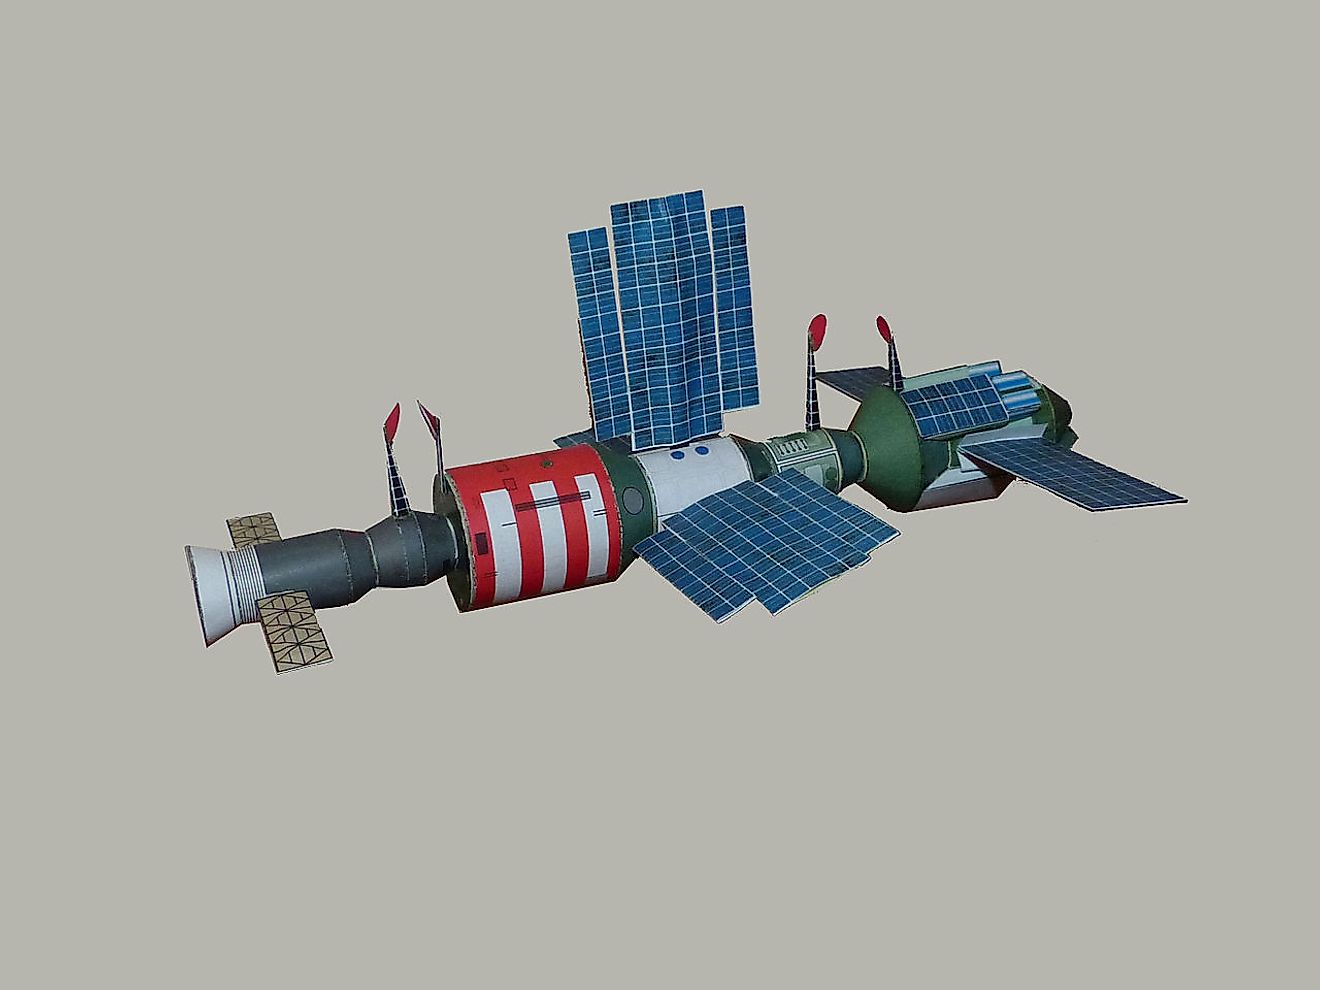 Salyut 7 soviet space station paper model with Soyuz T-15 and Kosmos-1686 docked. Image credit: Godai/Wikimedia.org